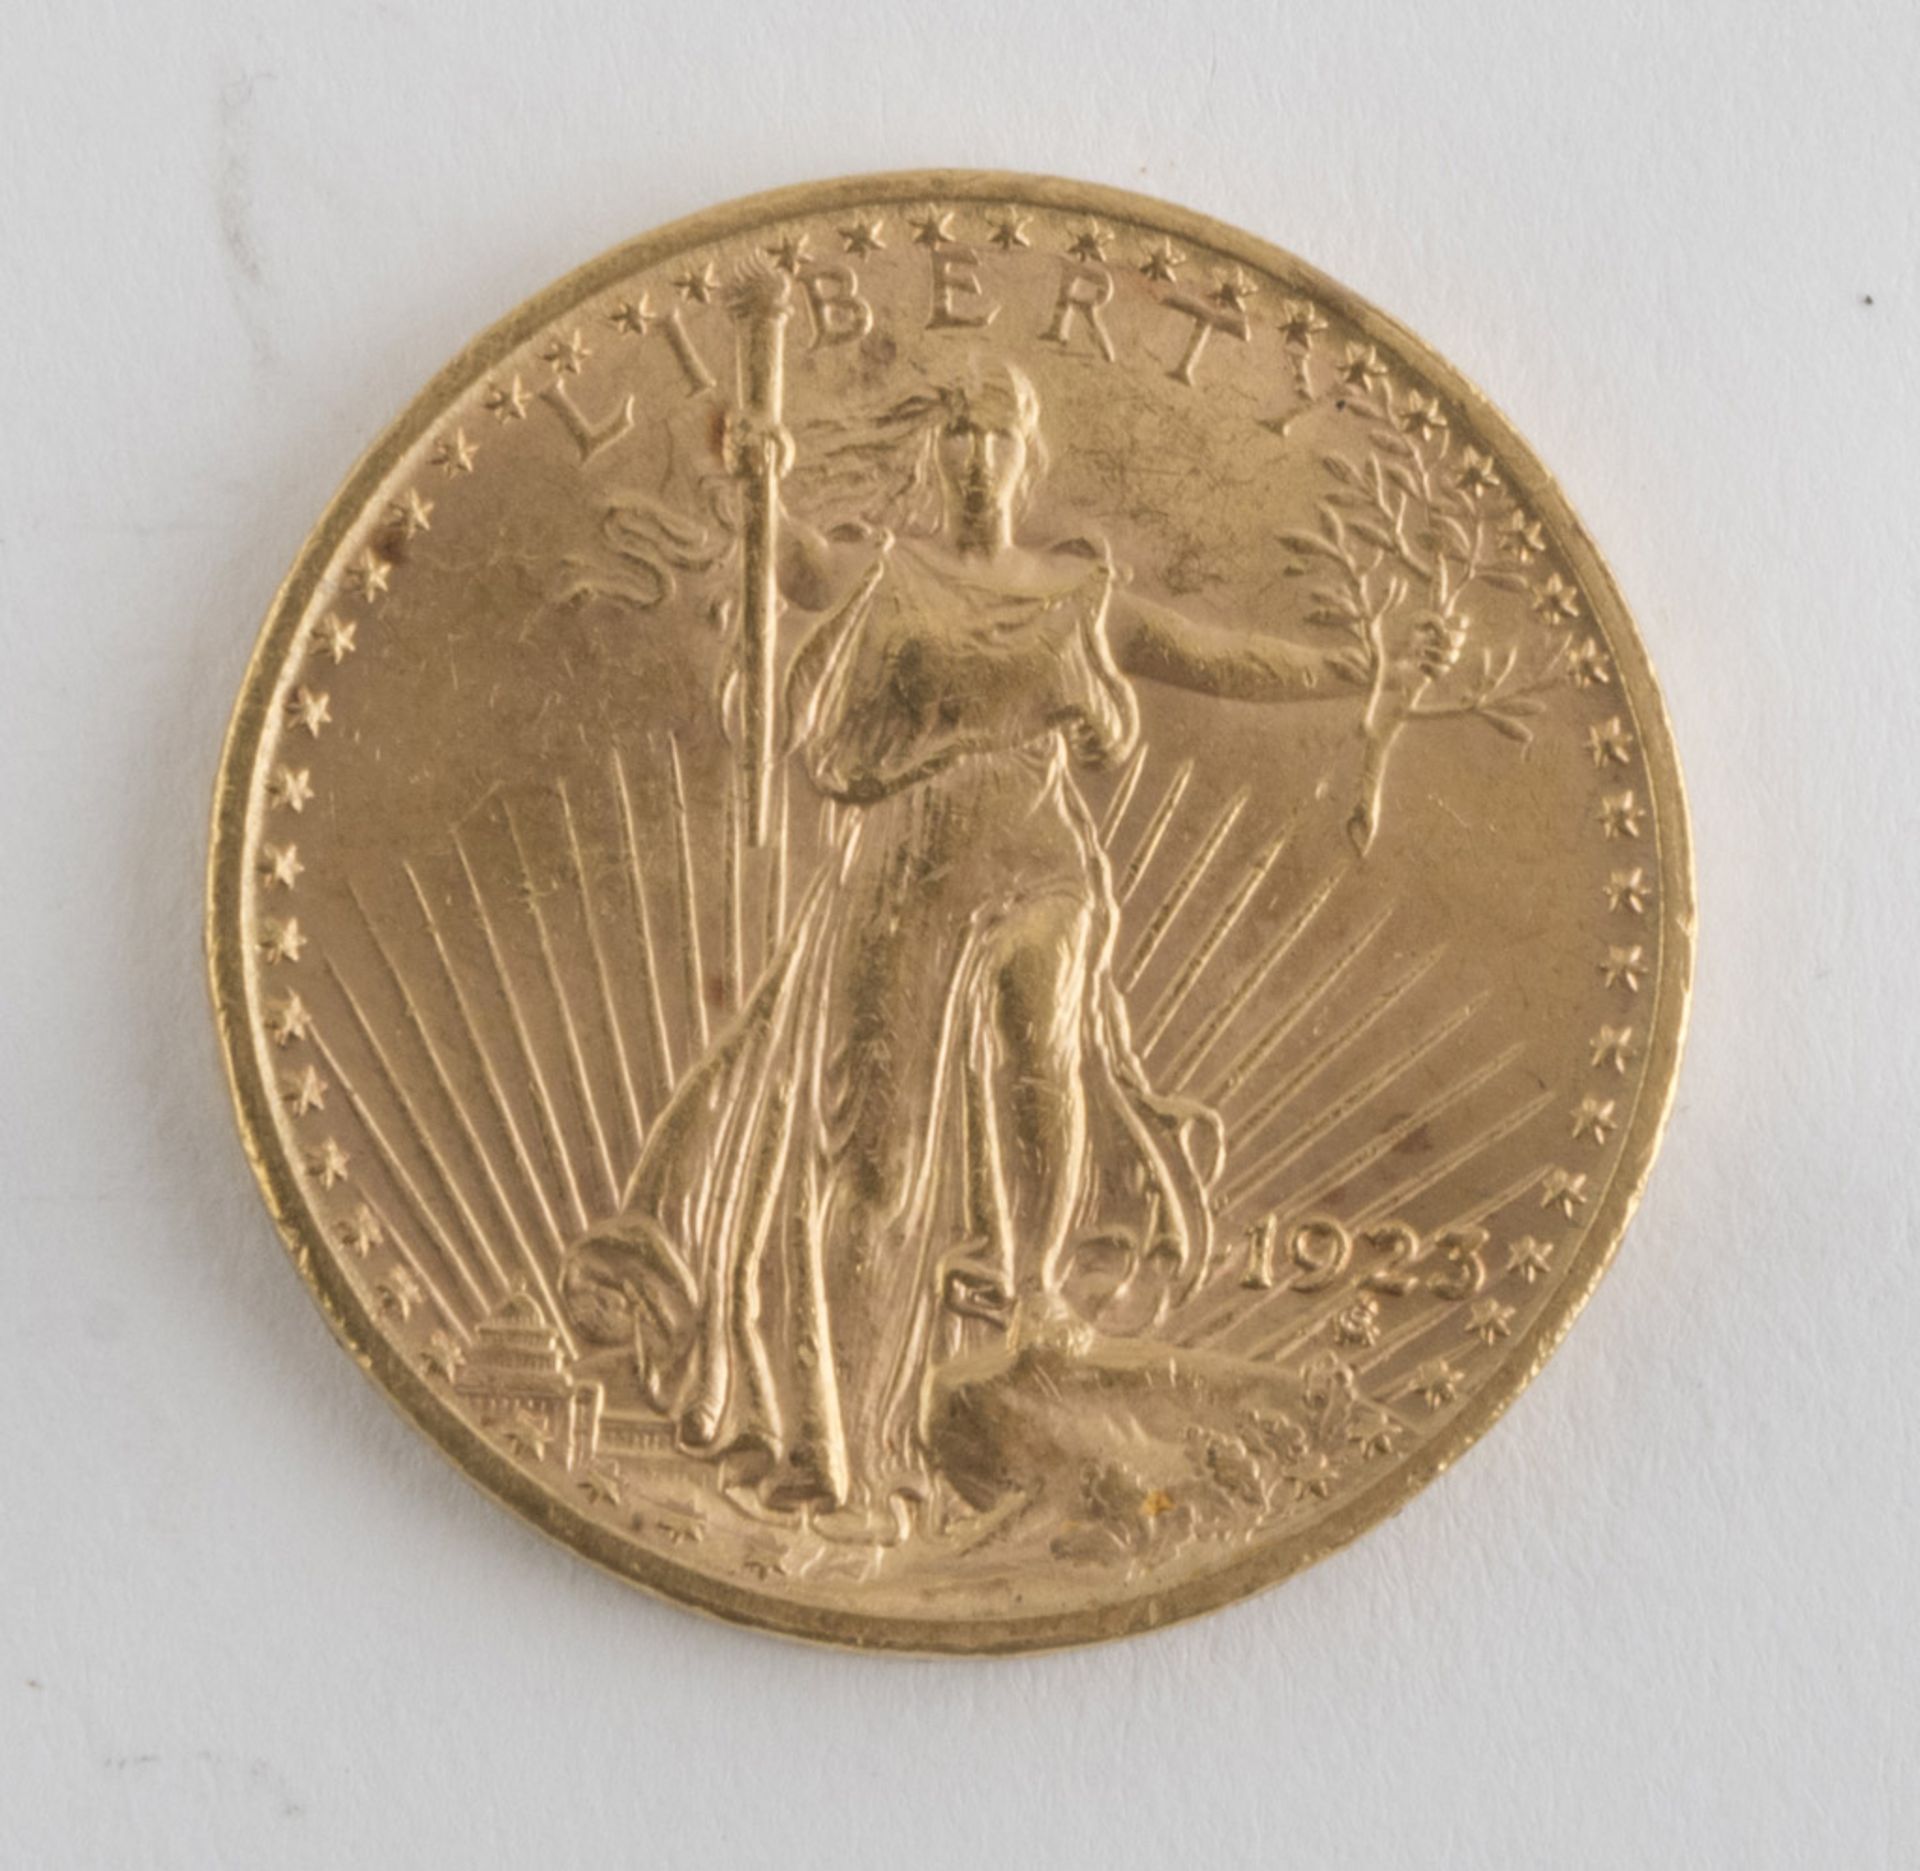 GOLD COIN OF 20 DOLLARS, UNITED STATES, 'SAINT GAUDEN' 1923 of the mint in Philadelphia. Km # 131. - Bild 2 aus 2